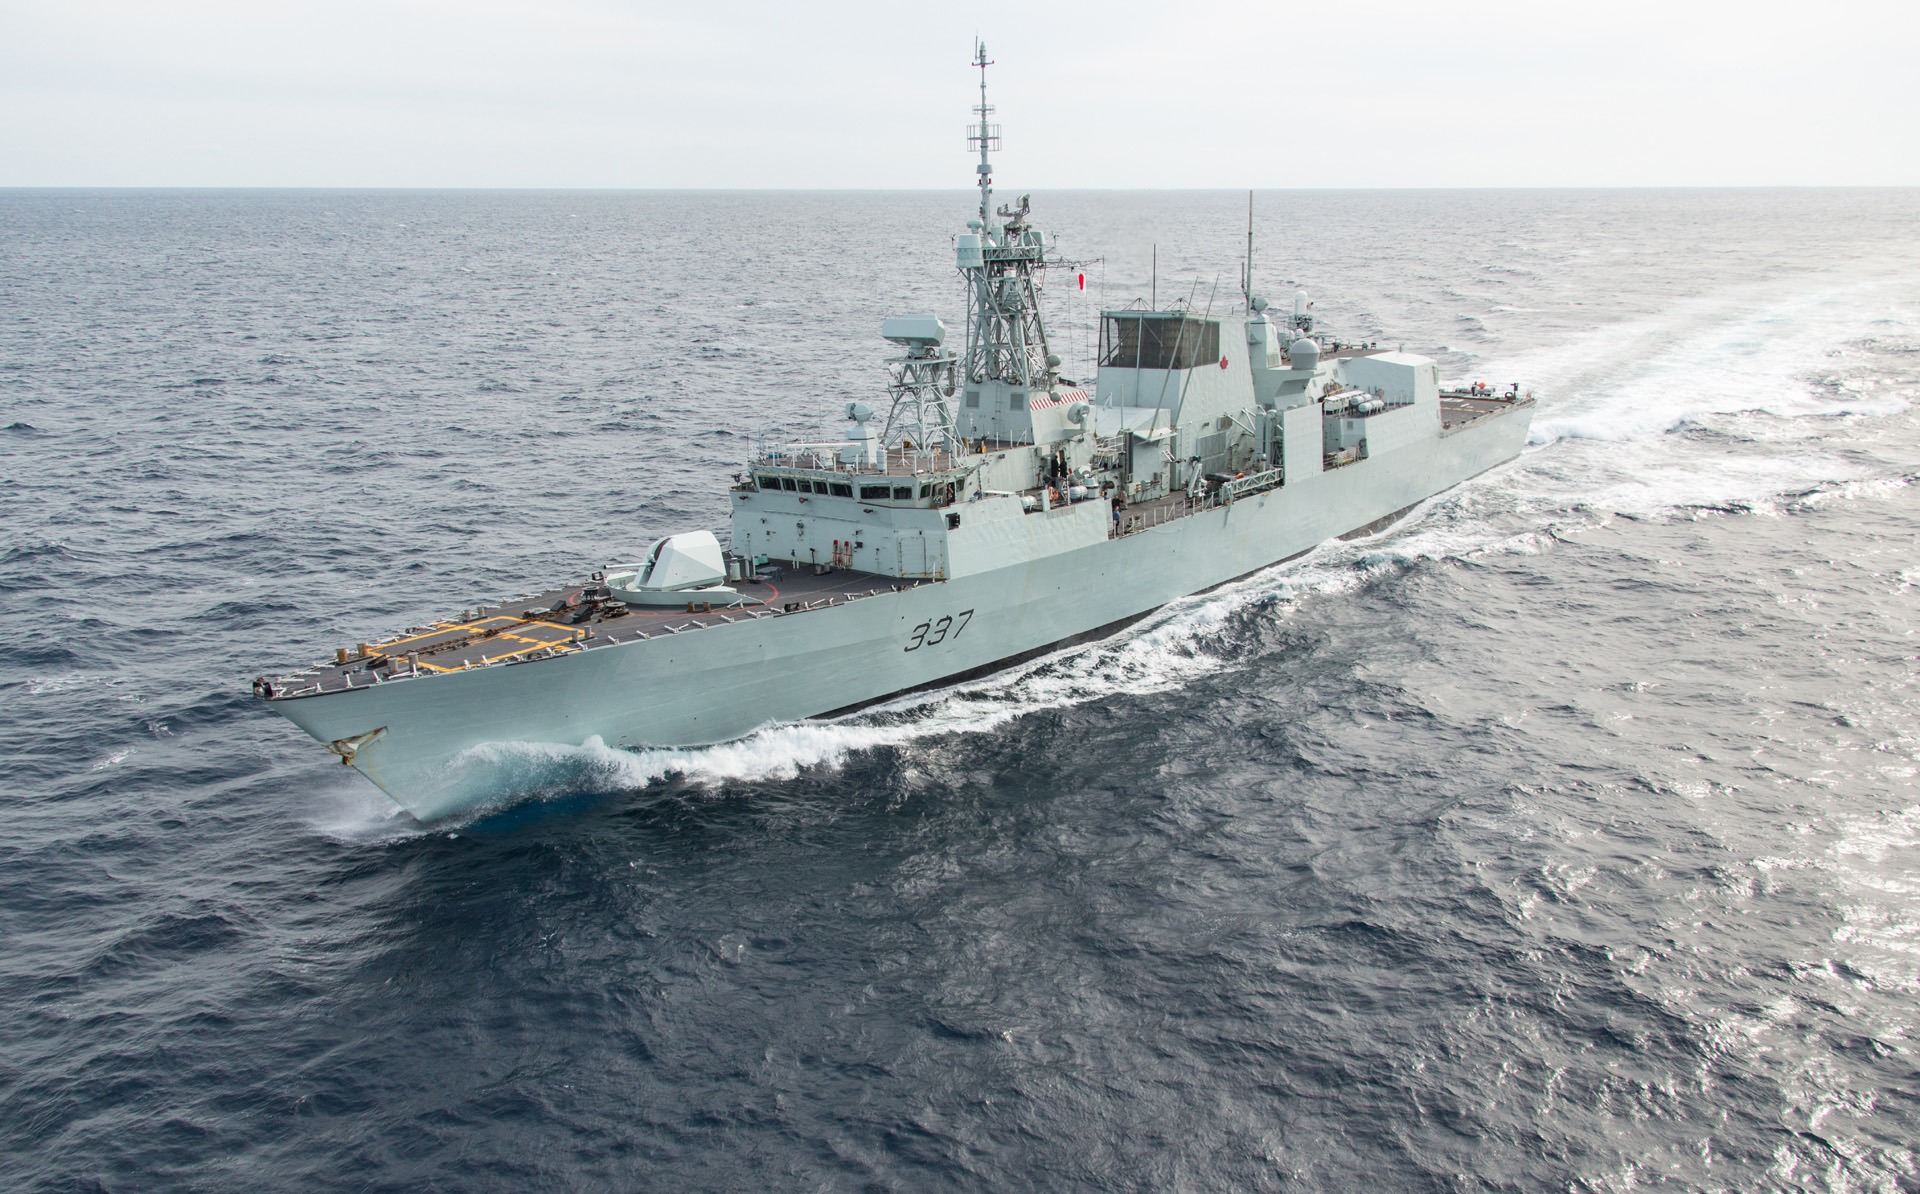 Halifax-class multi-role patrol frigate HMCS Fredericton